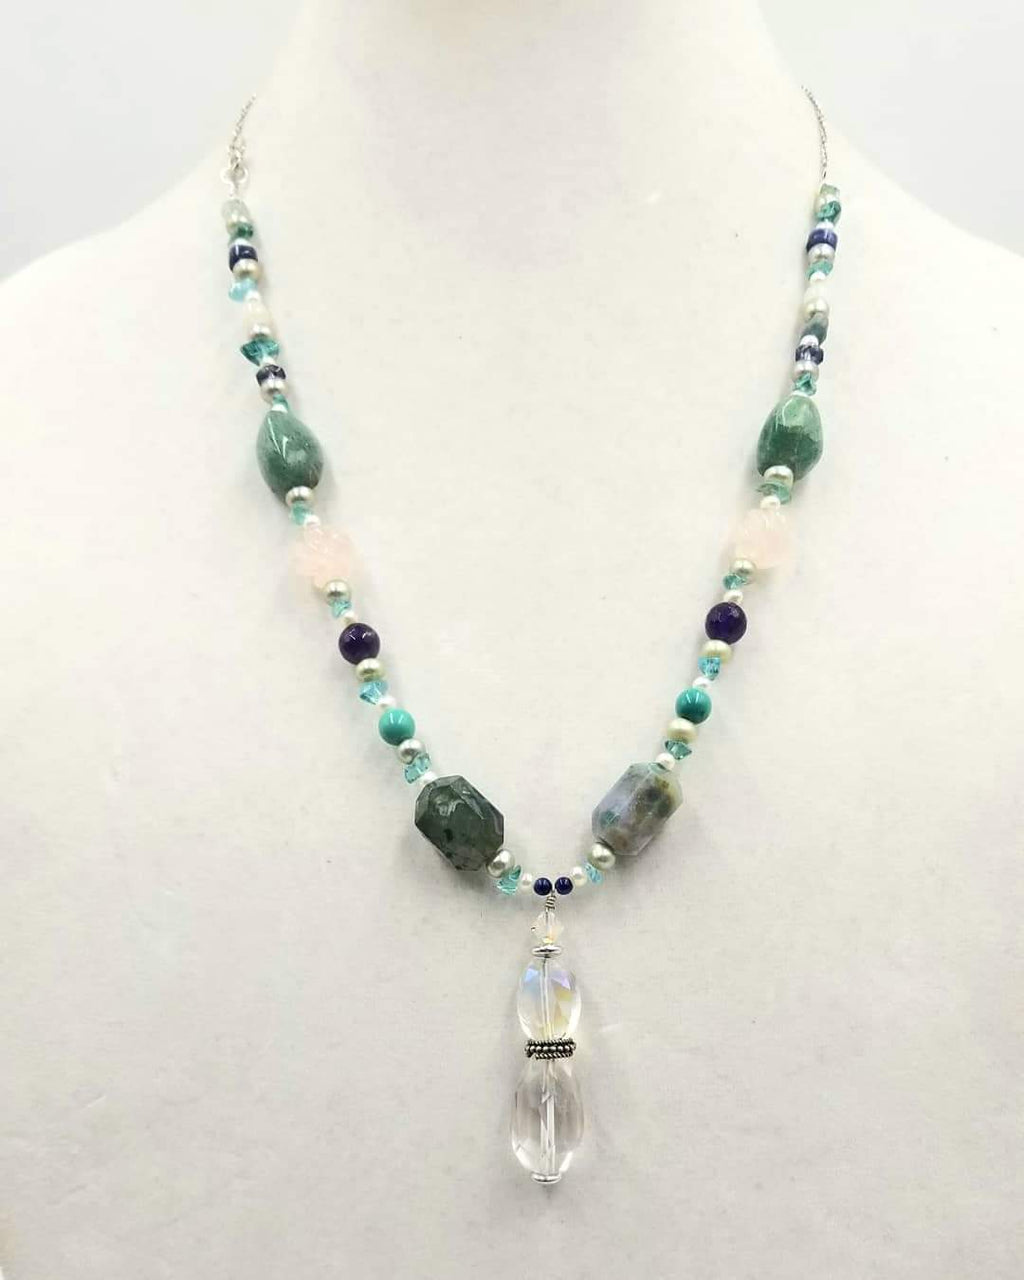 Sterling silver, apatite, agate, quartz, pearl, howlite, amethyst, & more, pendant necklace.  22" Length